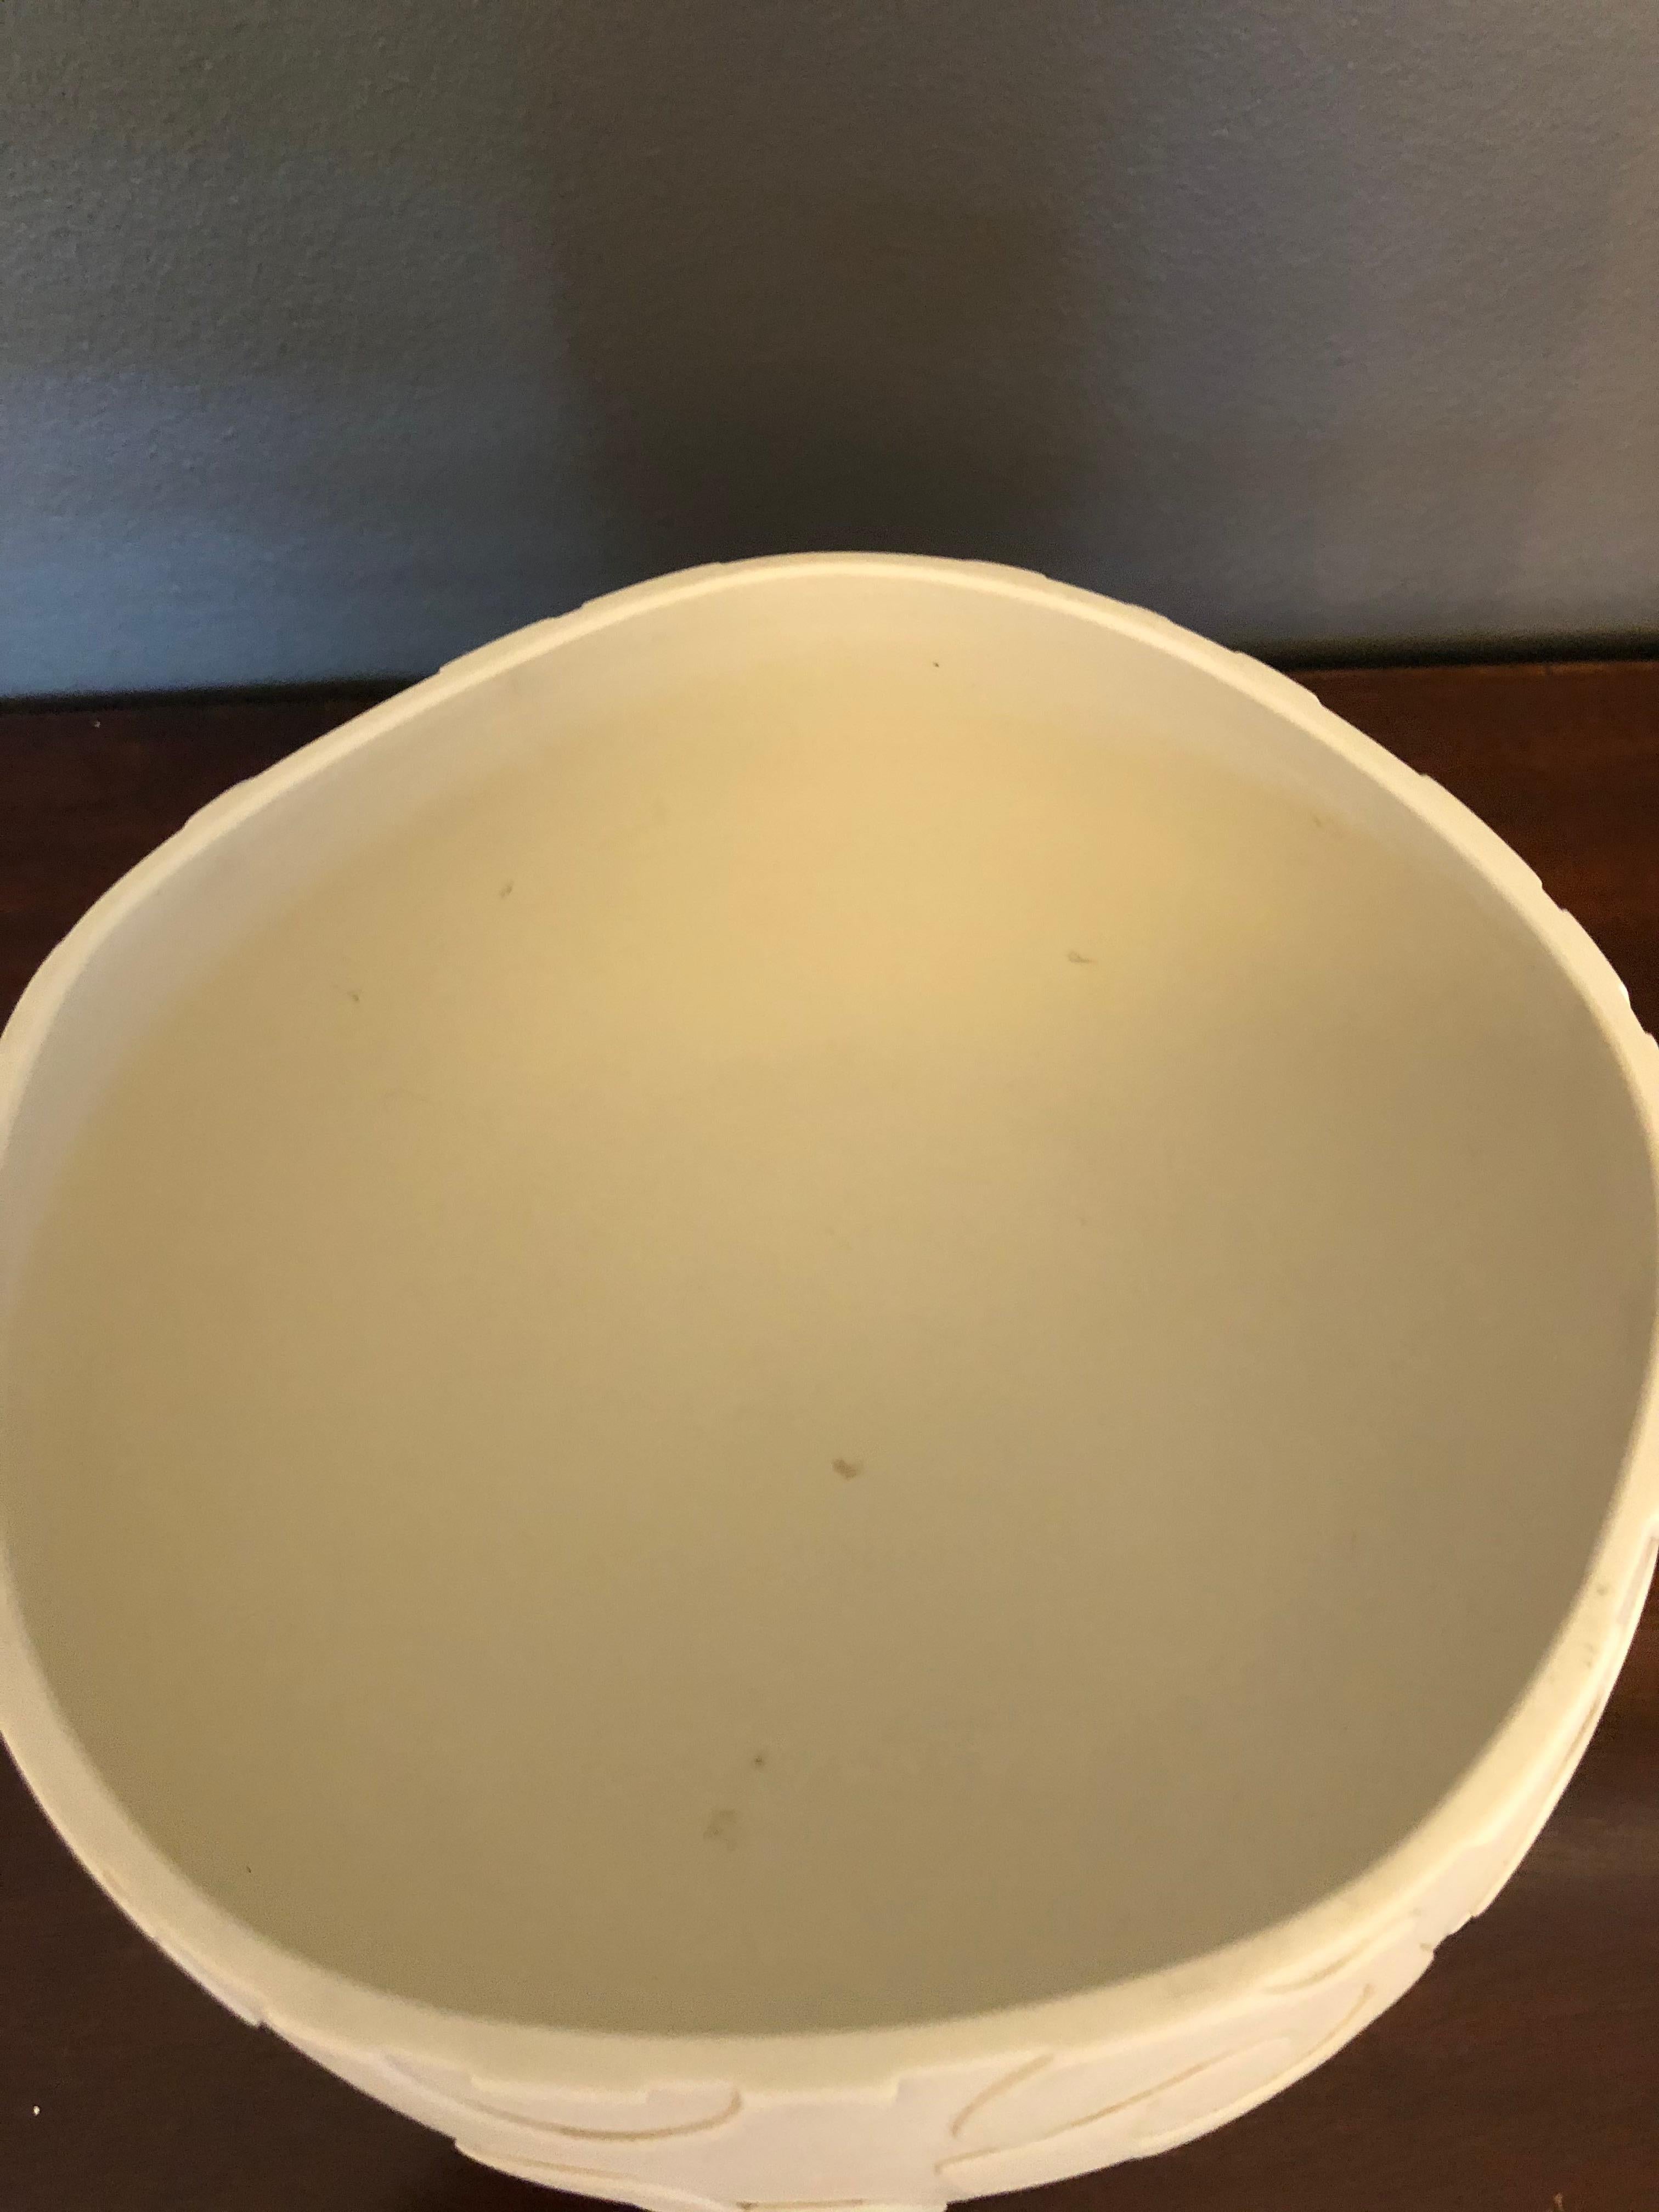 Late 20th Century Italian White Ceramic Bowl Attributed to Paola Lenti